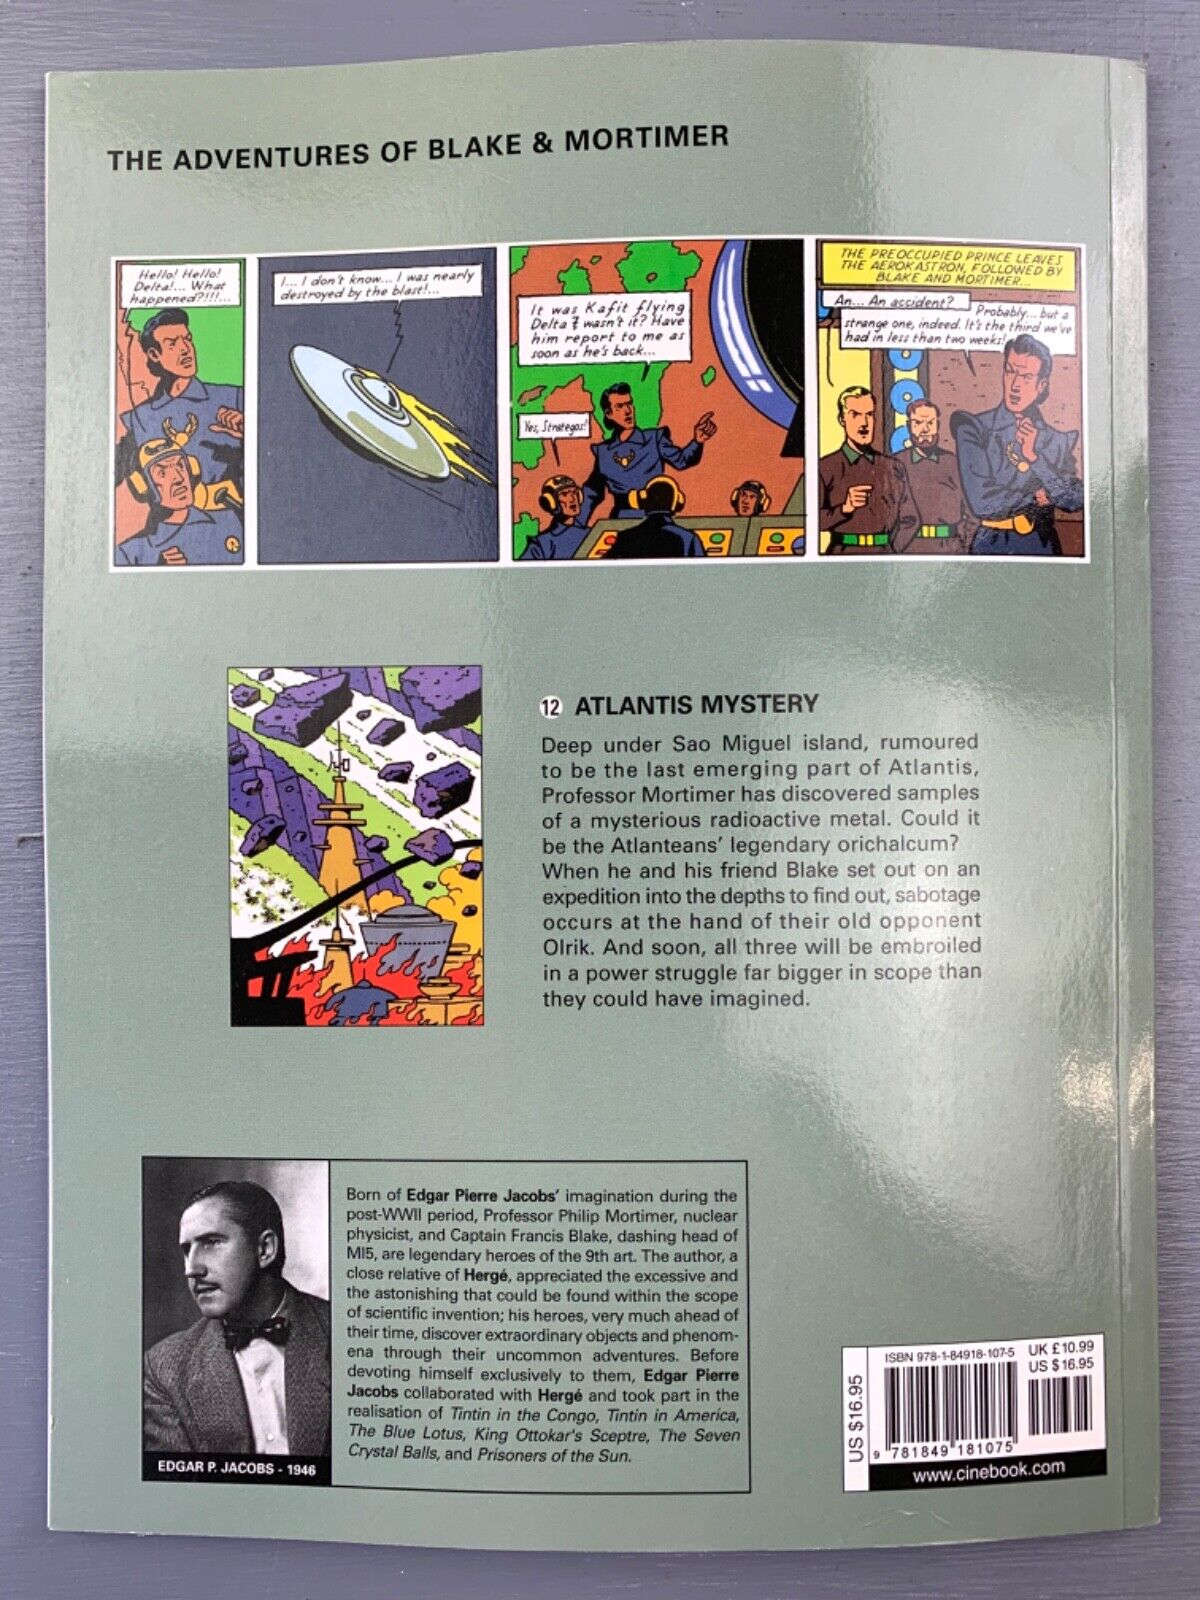 The Atlantis Mystery - Blake & Mortimer Comic Volume 12 - Cinebook UK Paperback Edition